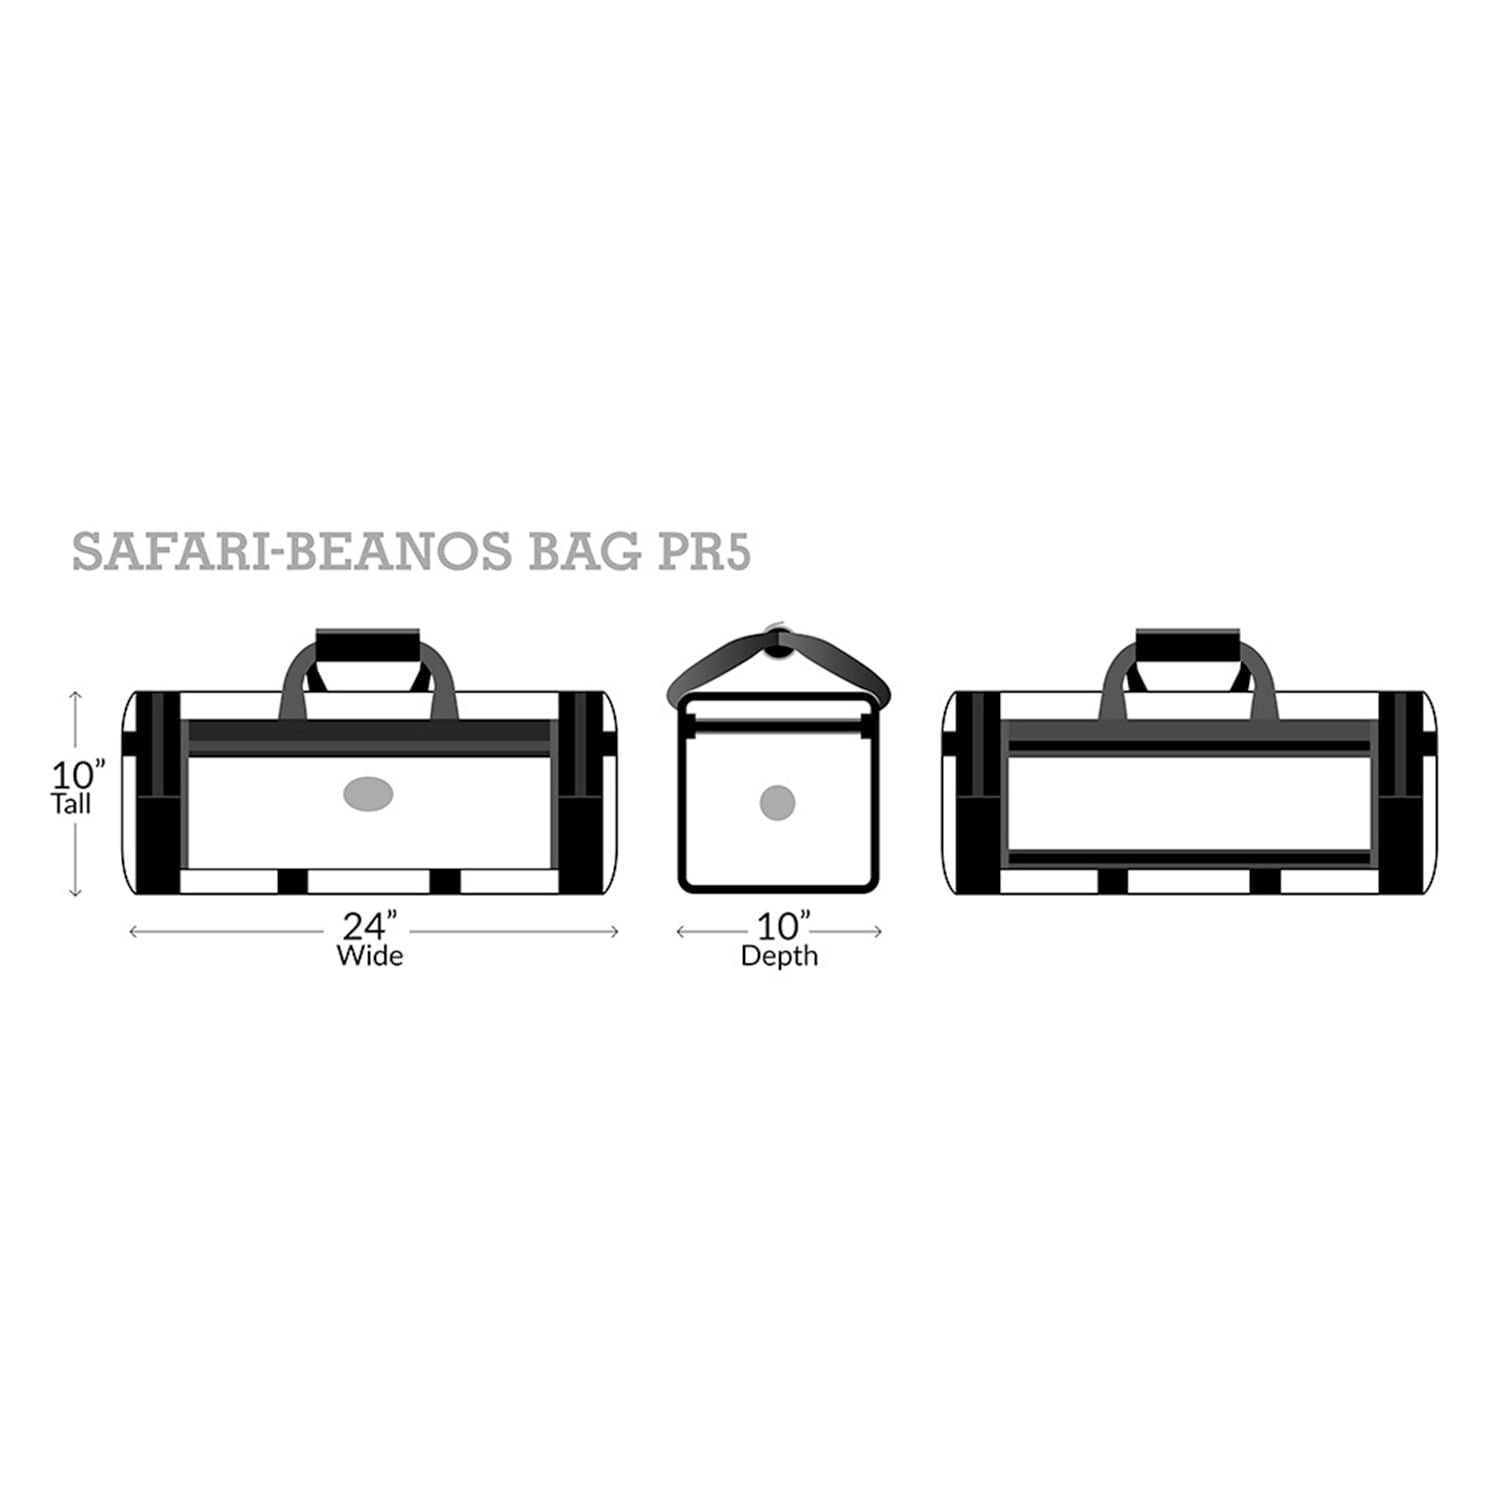 Safari-Beanos PR5 Medium Duffel